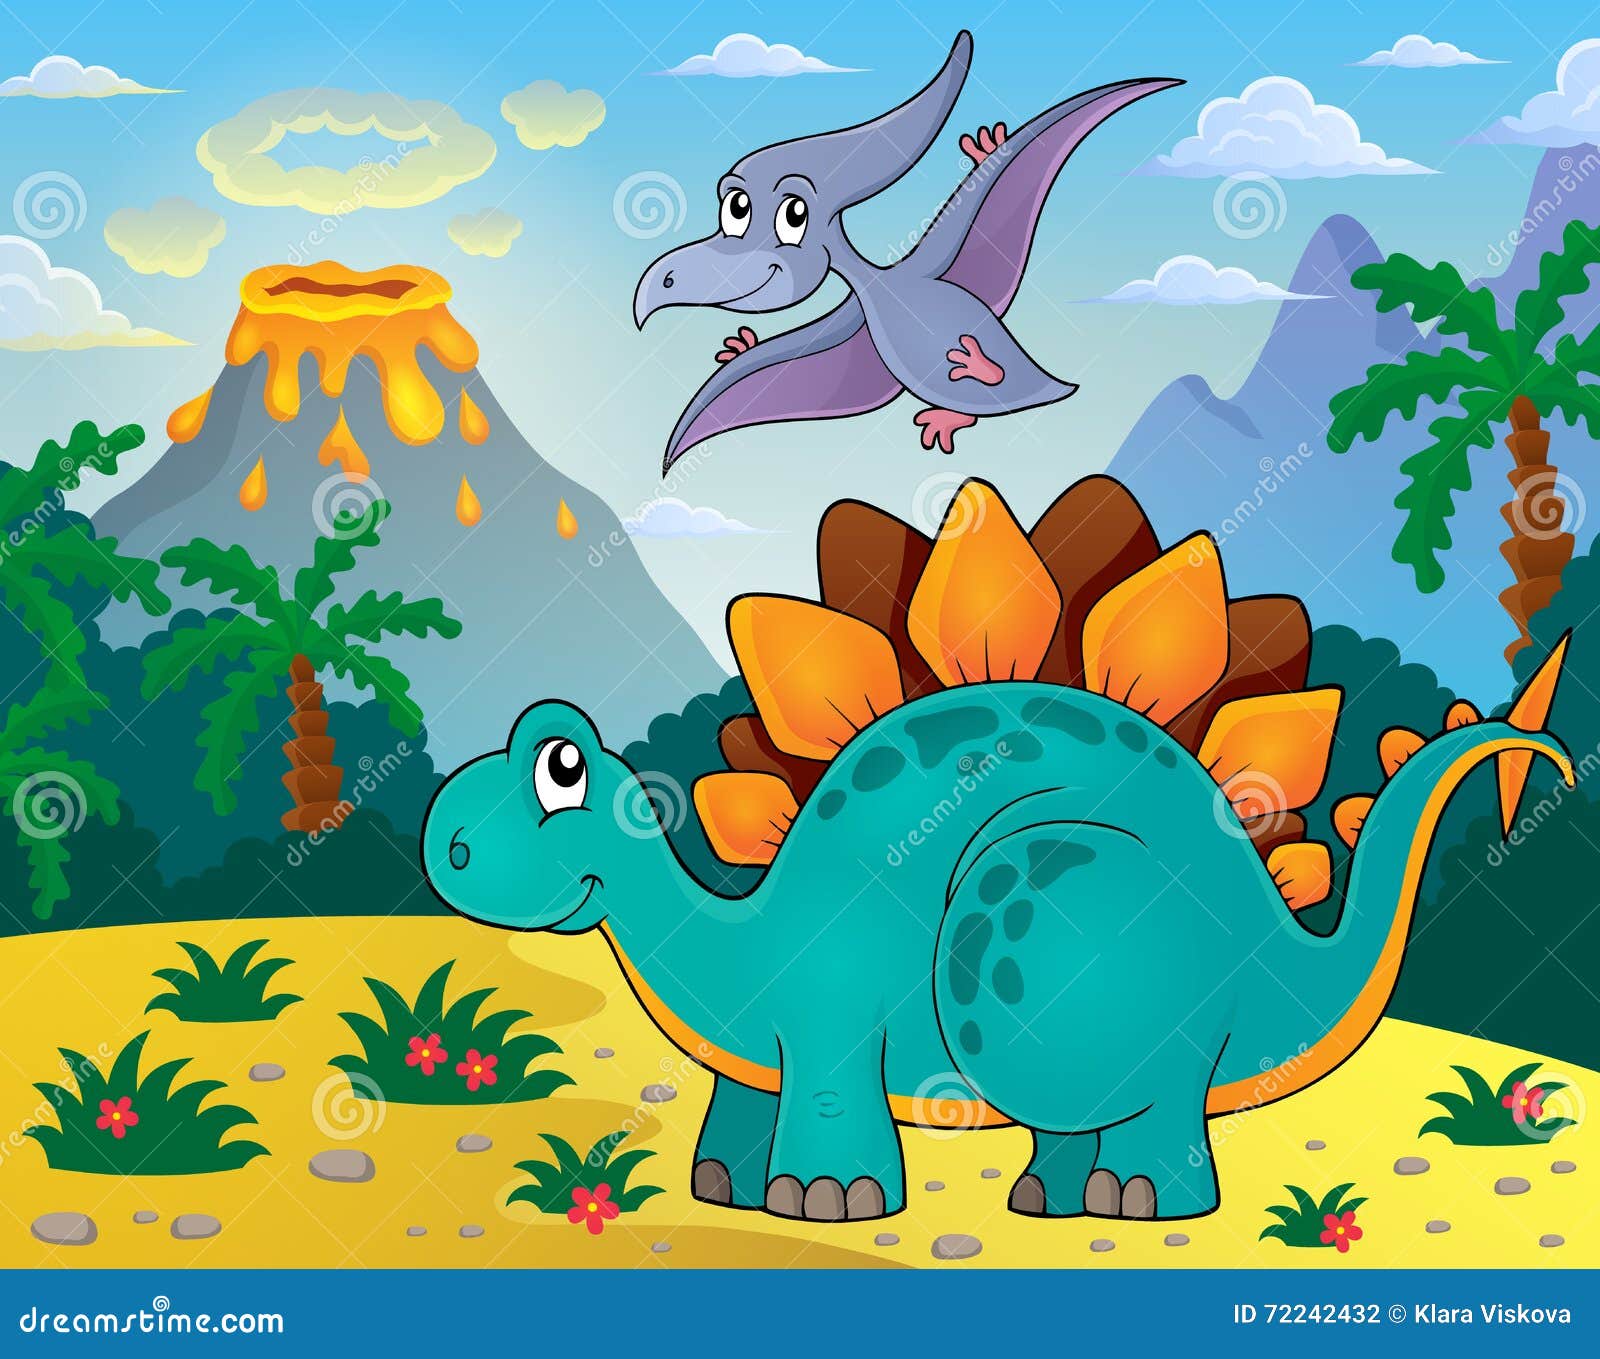 dinosaur-topic-image-3-stock-vector-illustration-of-vectors-72242432